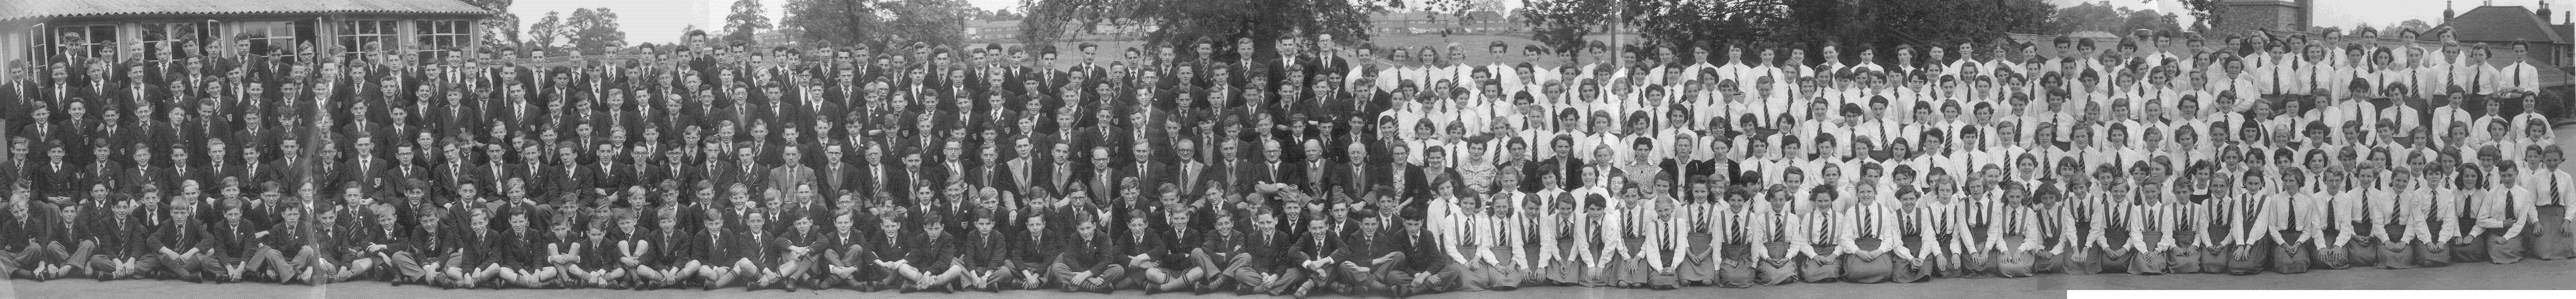 School in 1955